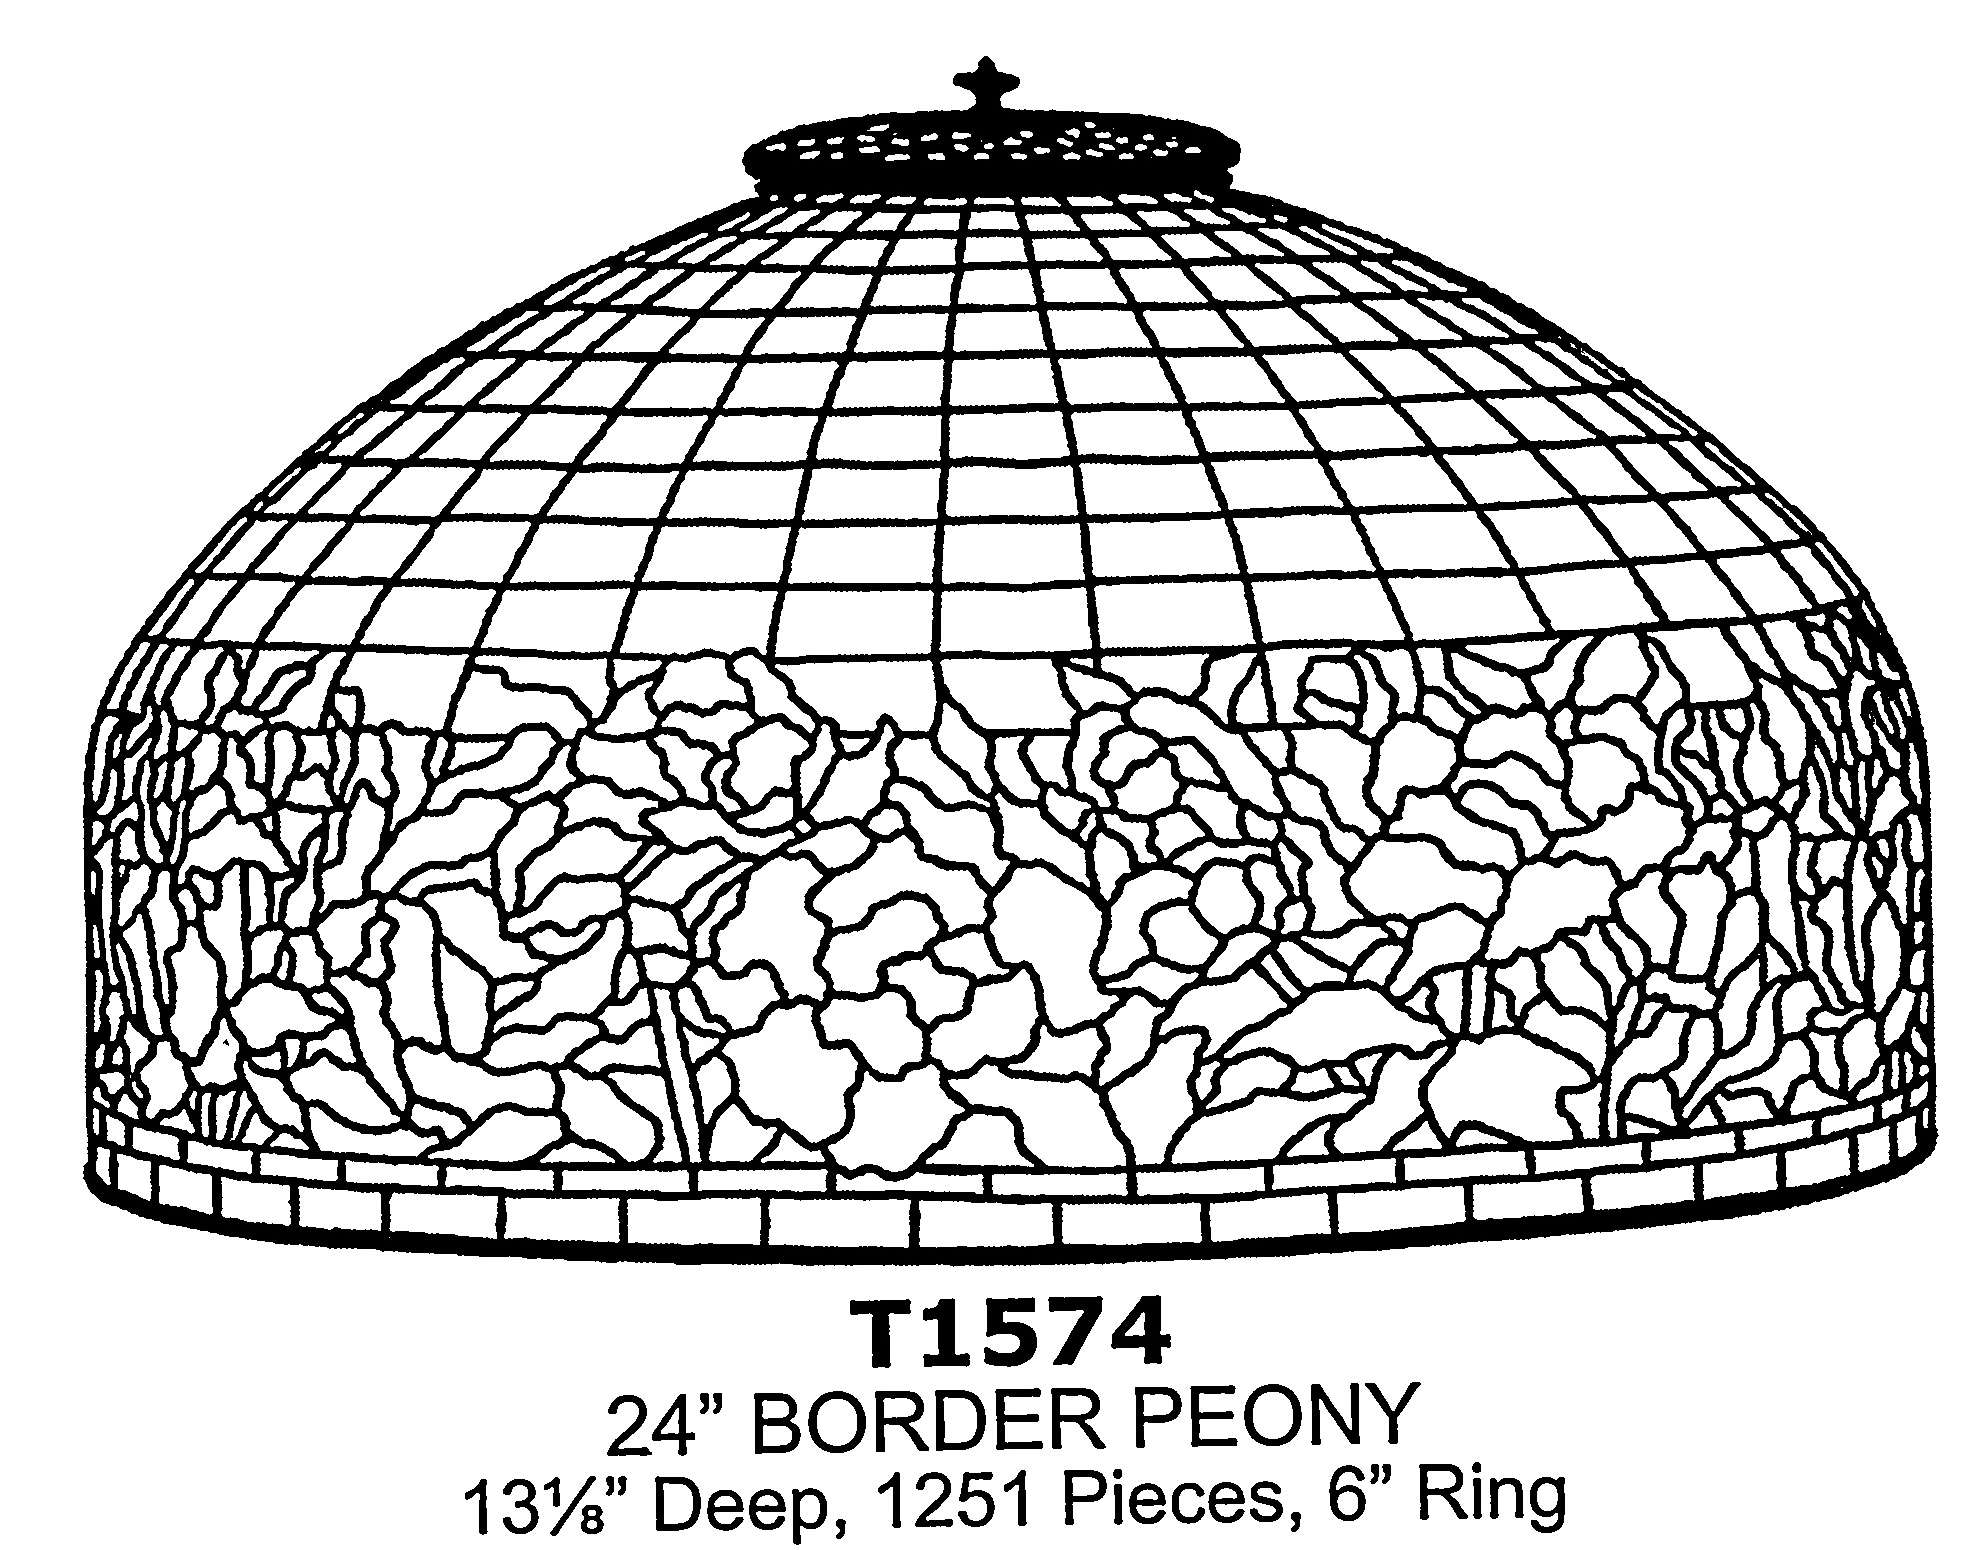 24" Border Peony